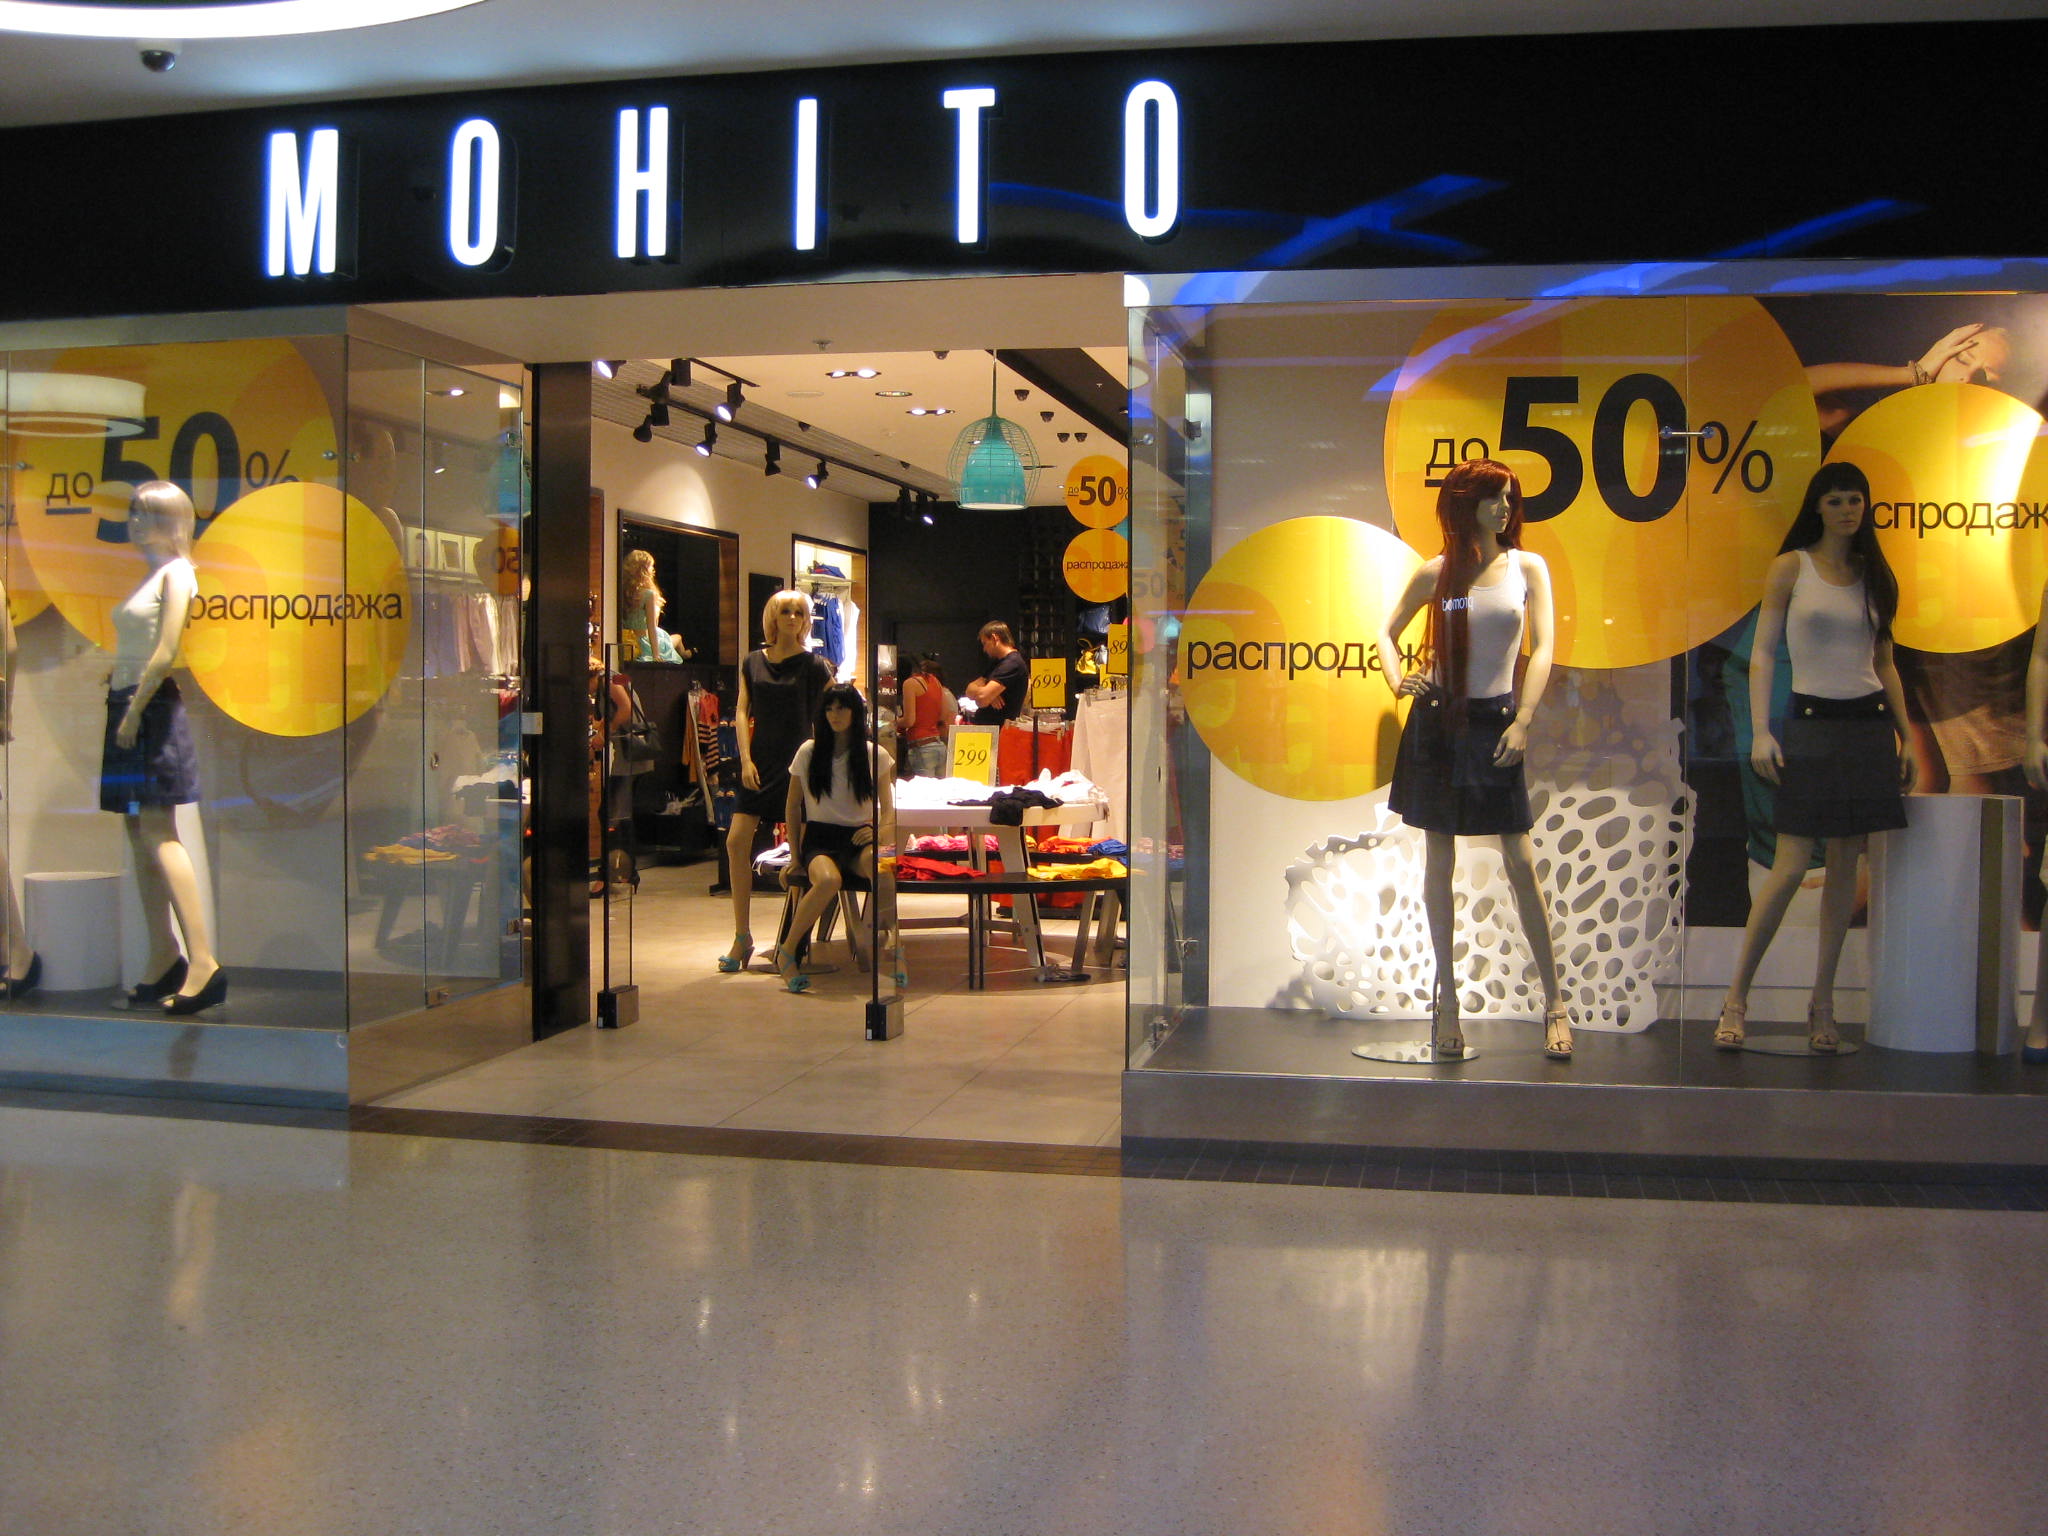 Mohito Интернет Магазин Одежды